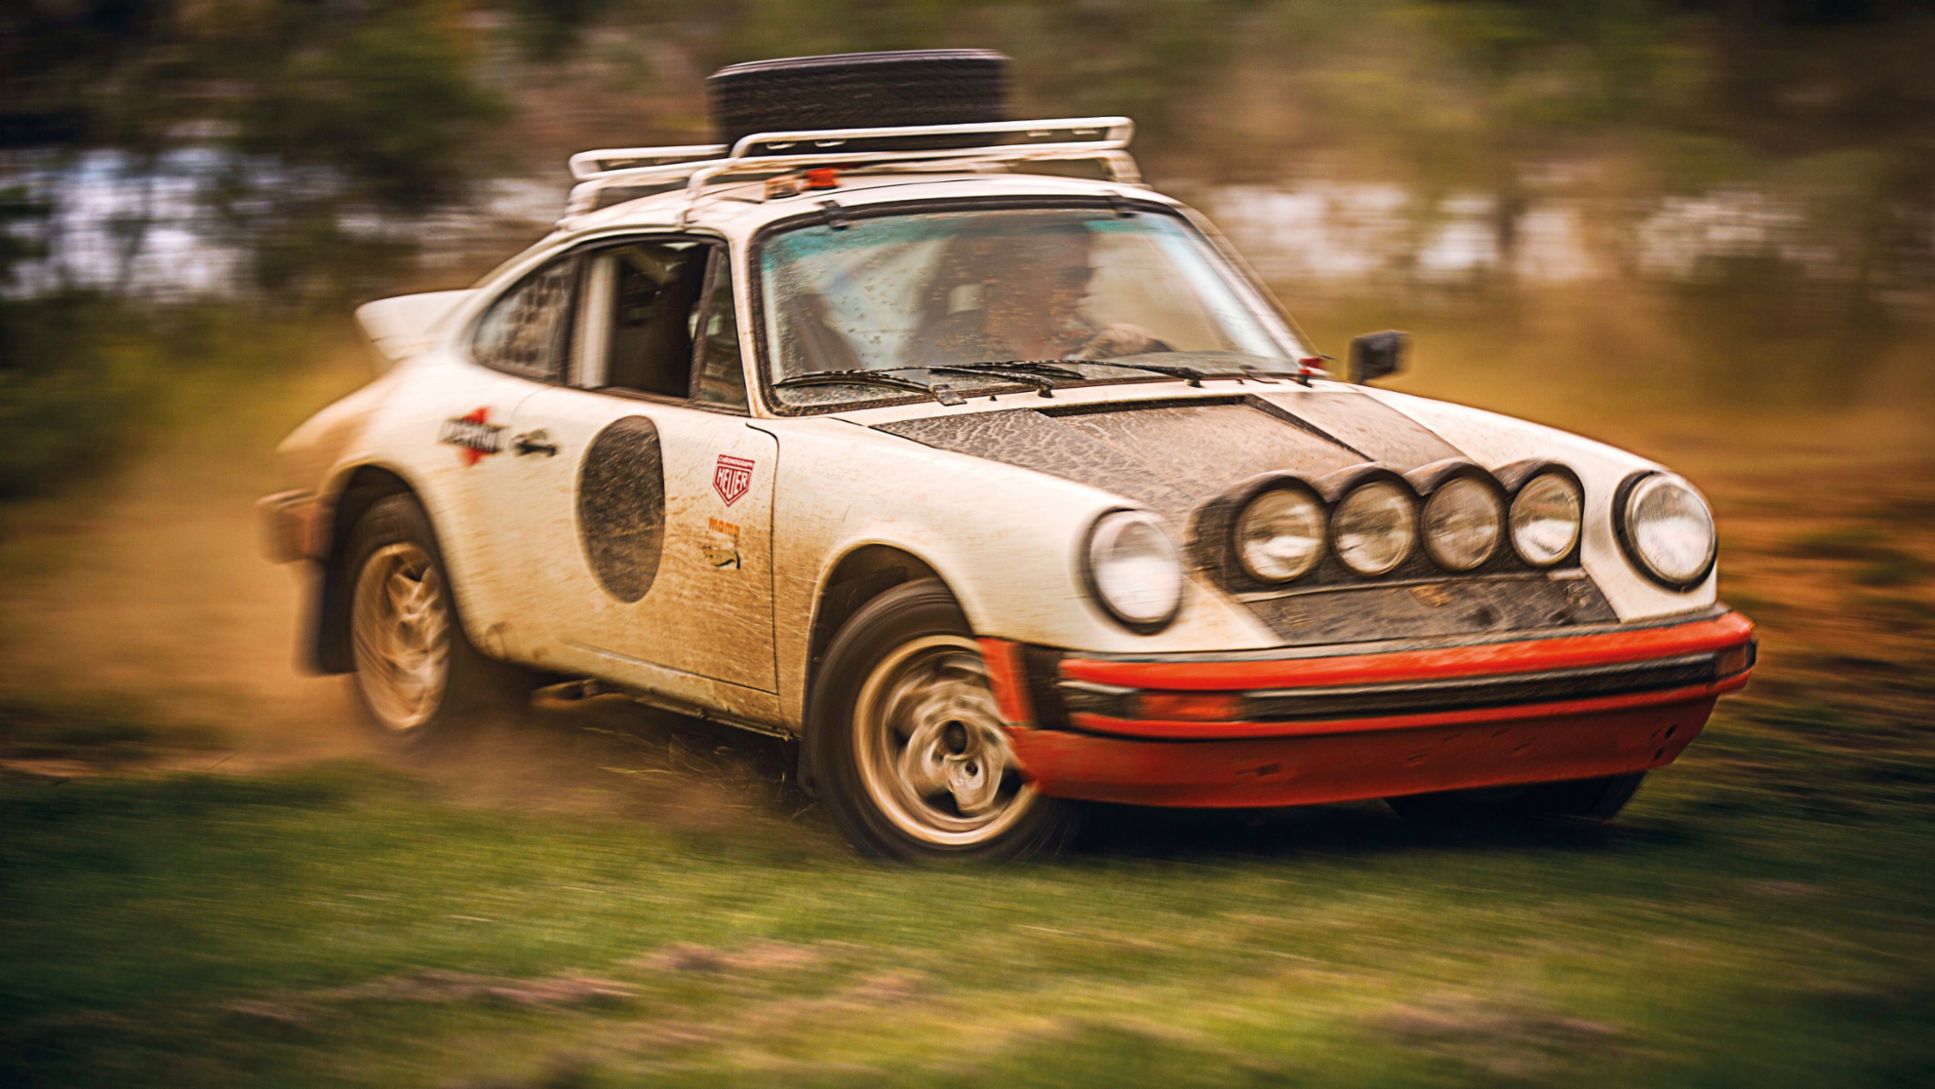 Jim Goodlett, Porsche 911 SC Rally car of 1978, 2020, Porsche AG